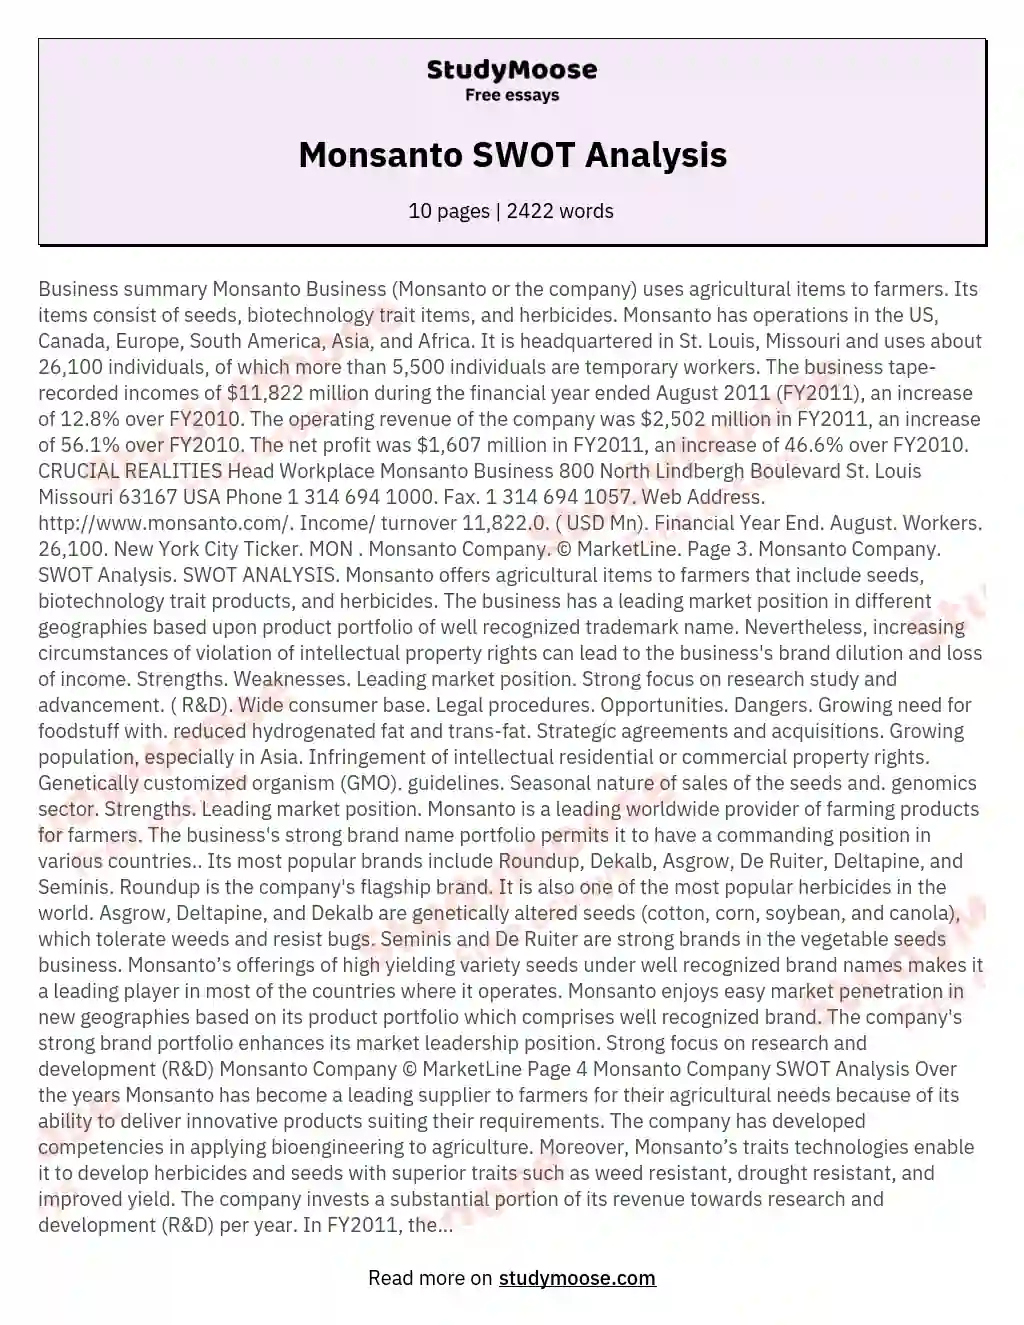 Monsanto SWOT Analysis essay